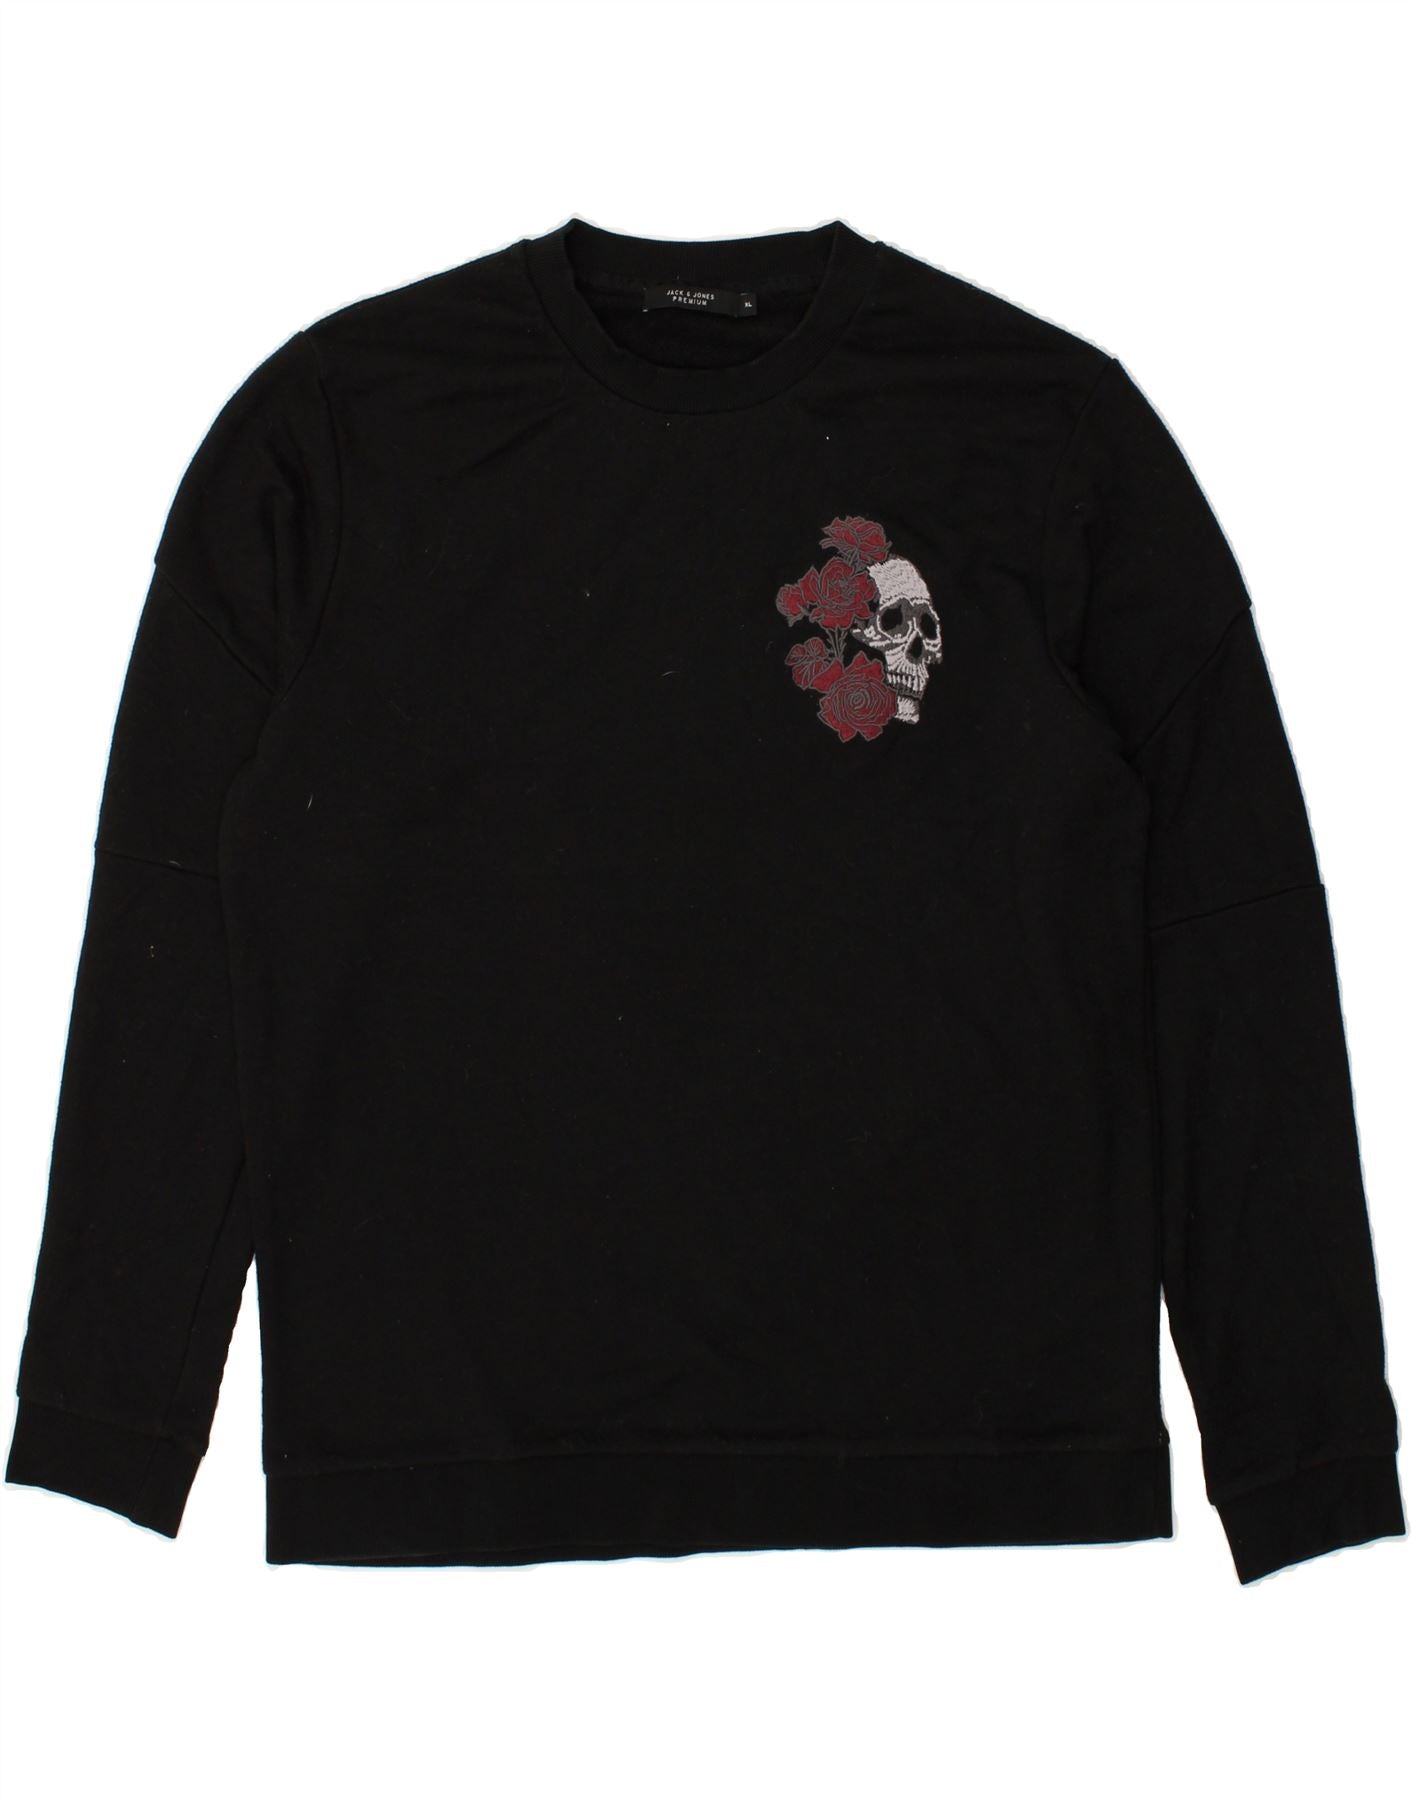 JACK & JONES Mens Sweatshirt Jumper XL Black Polyester